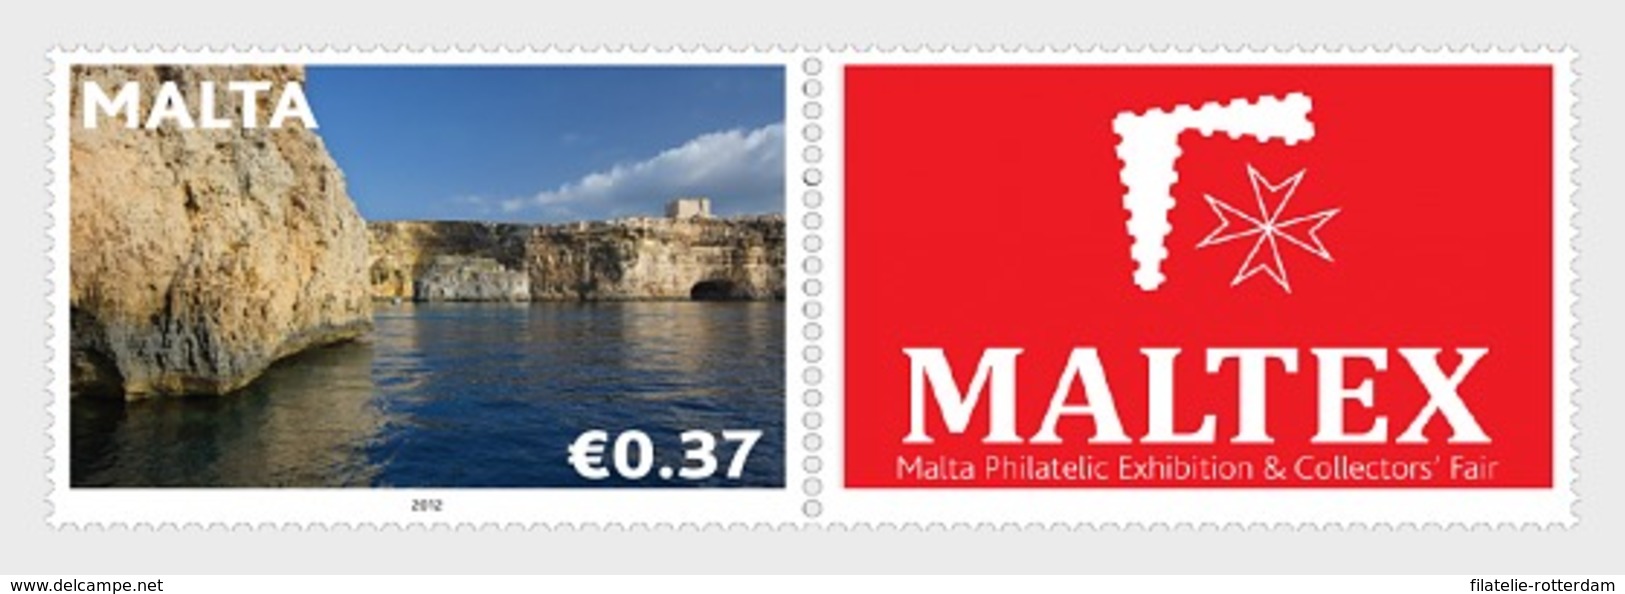 Malta / Malte - Postfris / MNH - Maltex 2018 - Malta